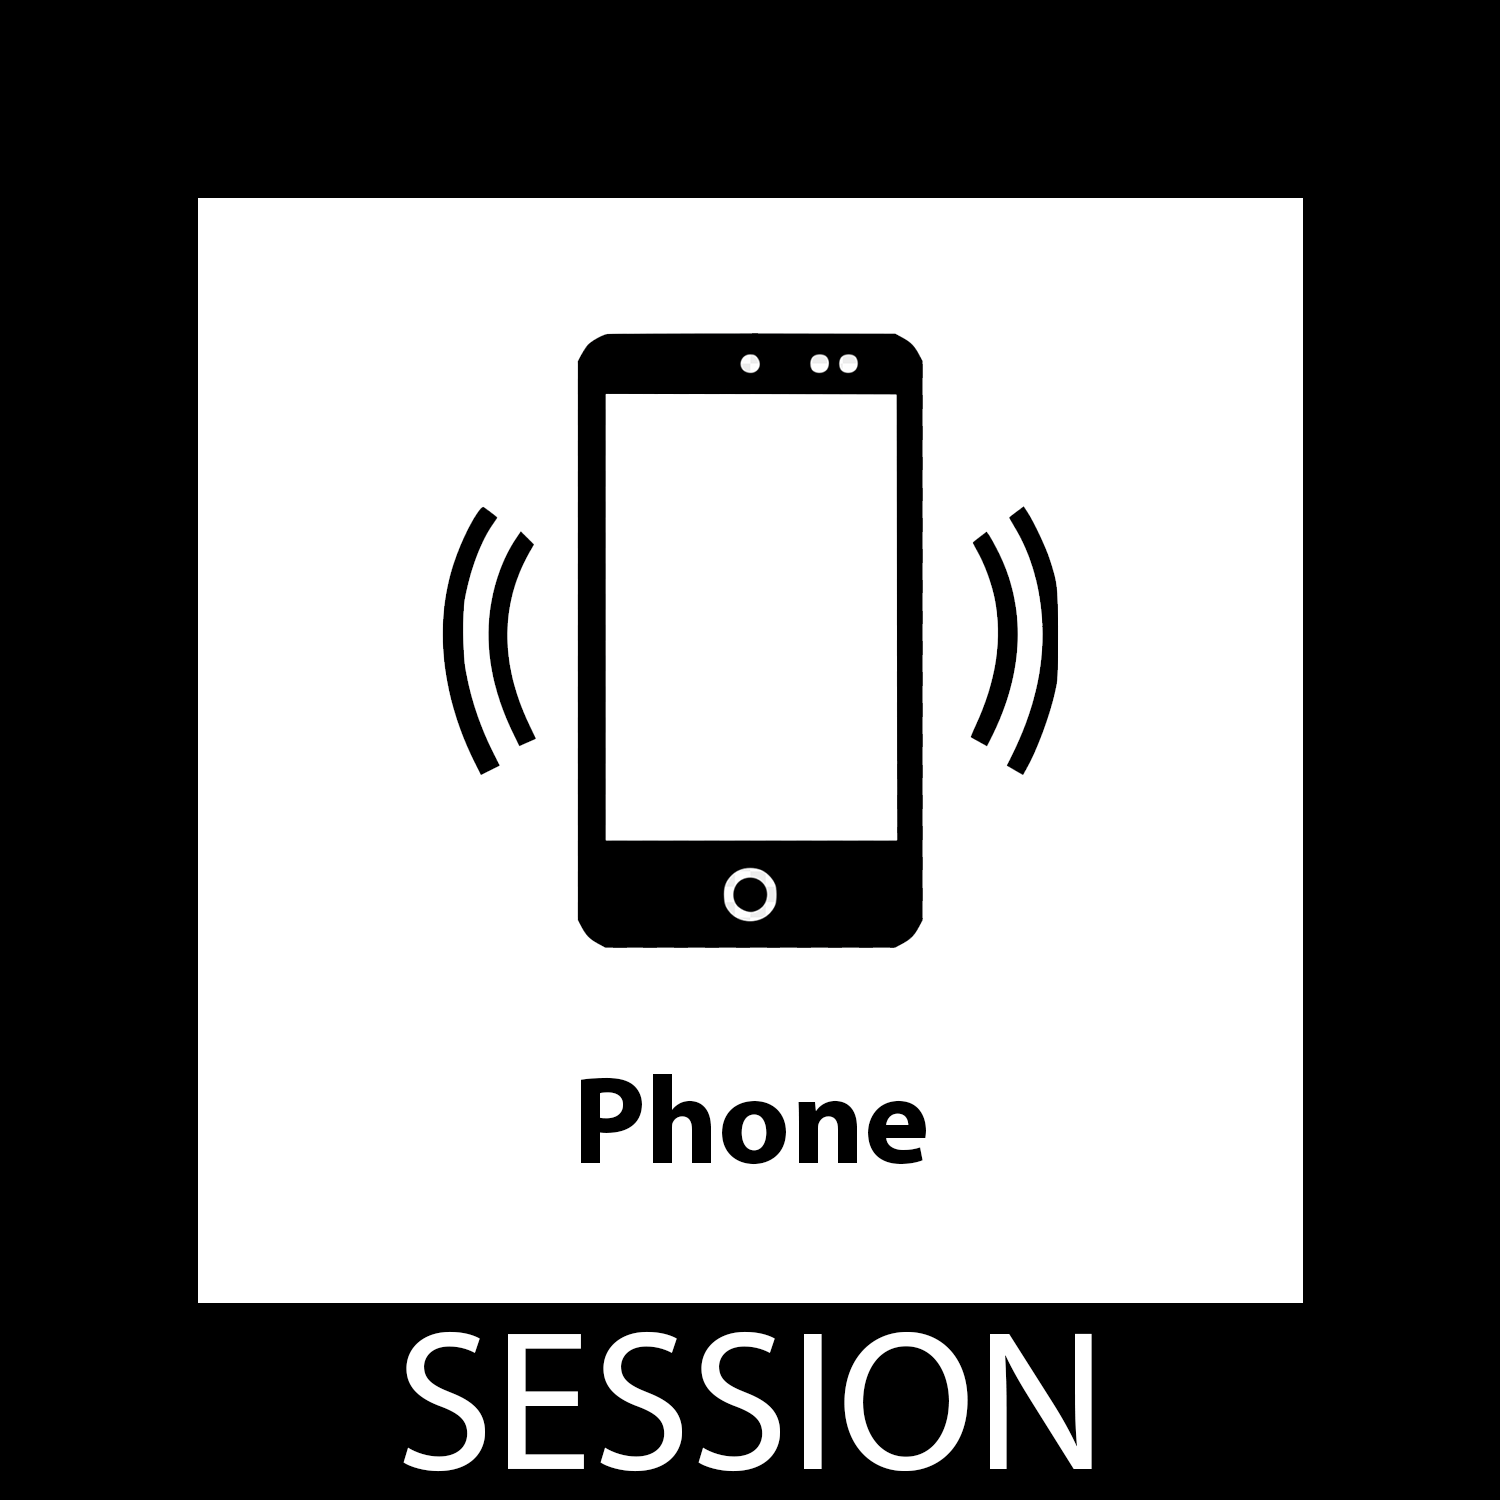 Phone Session